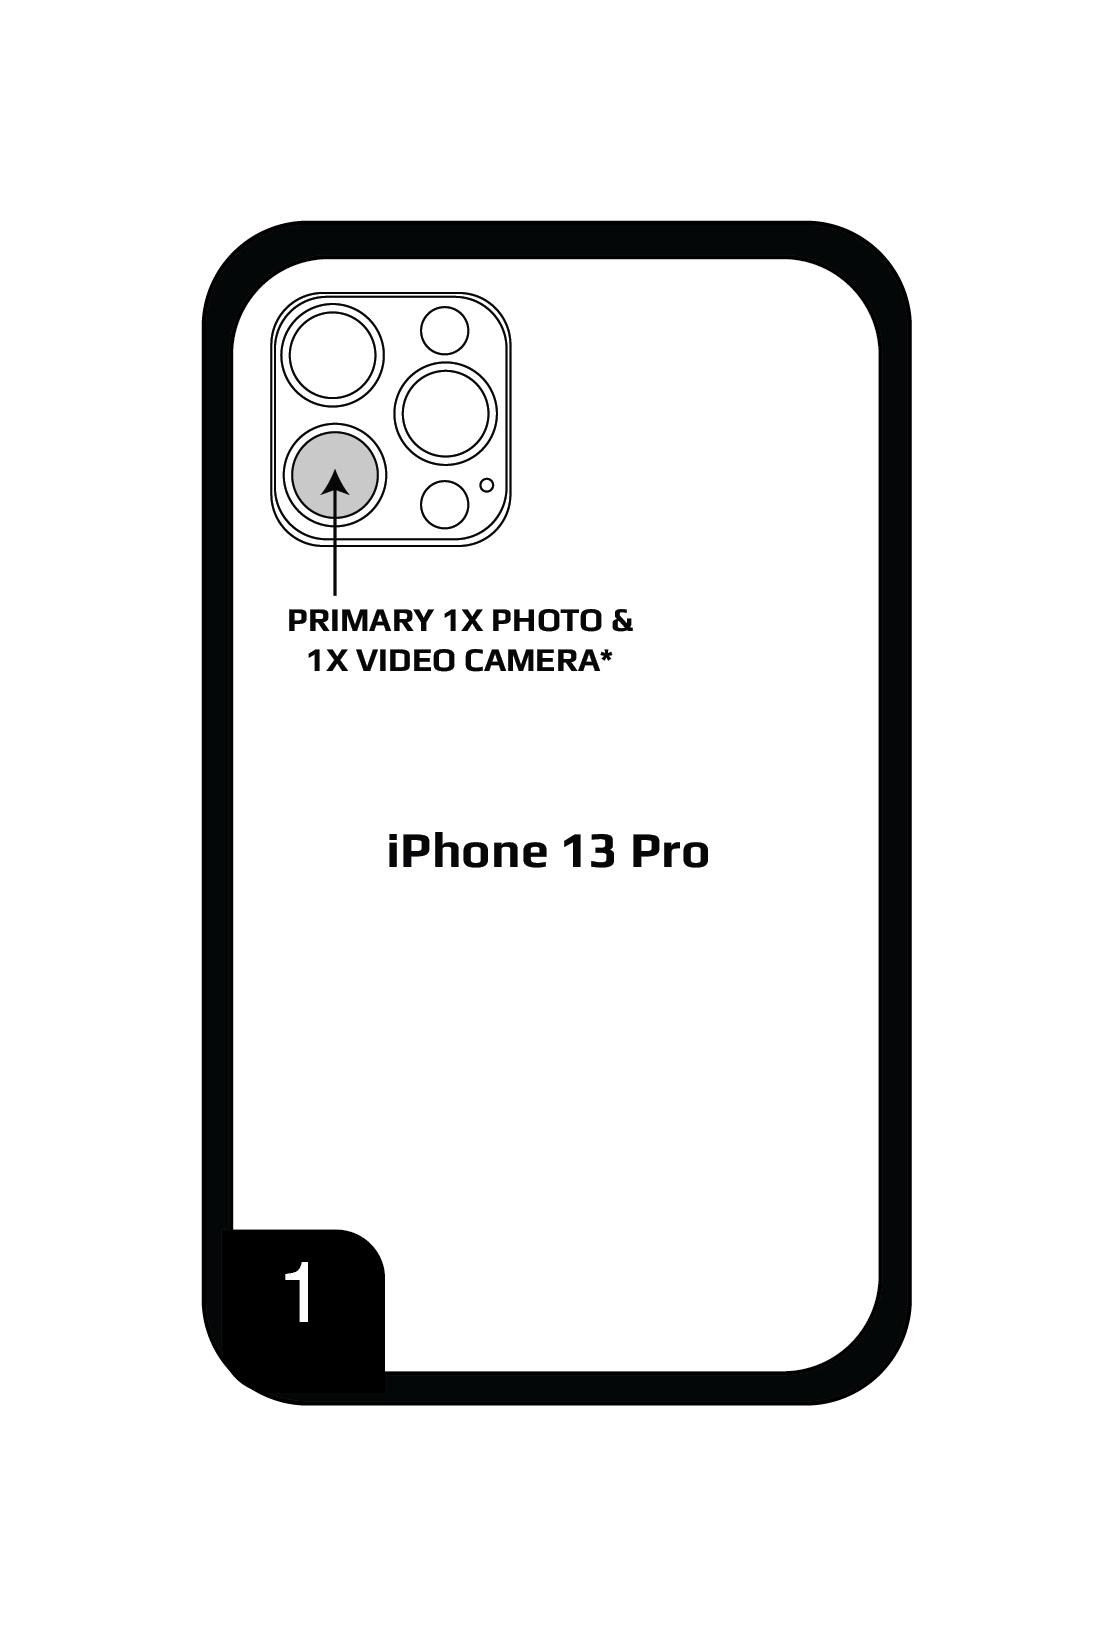 iPhone 13 pro camera step 1